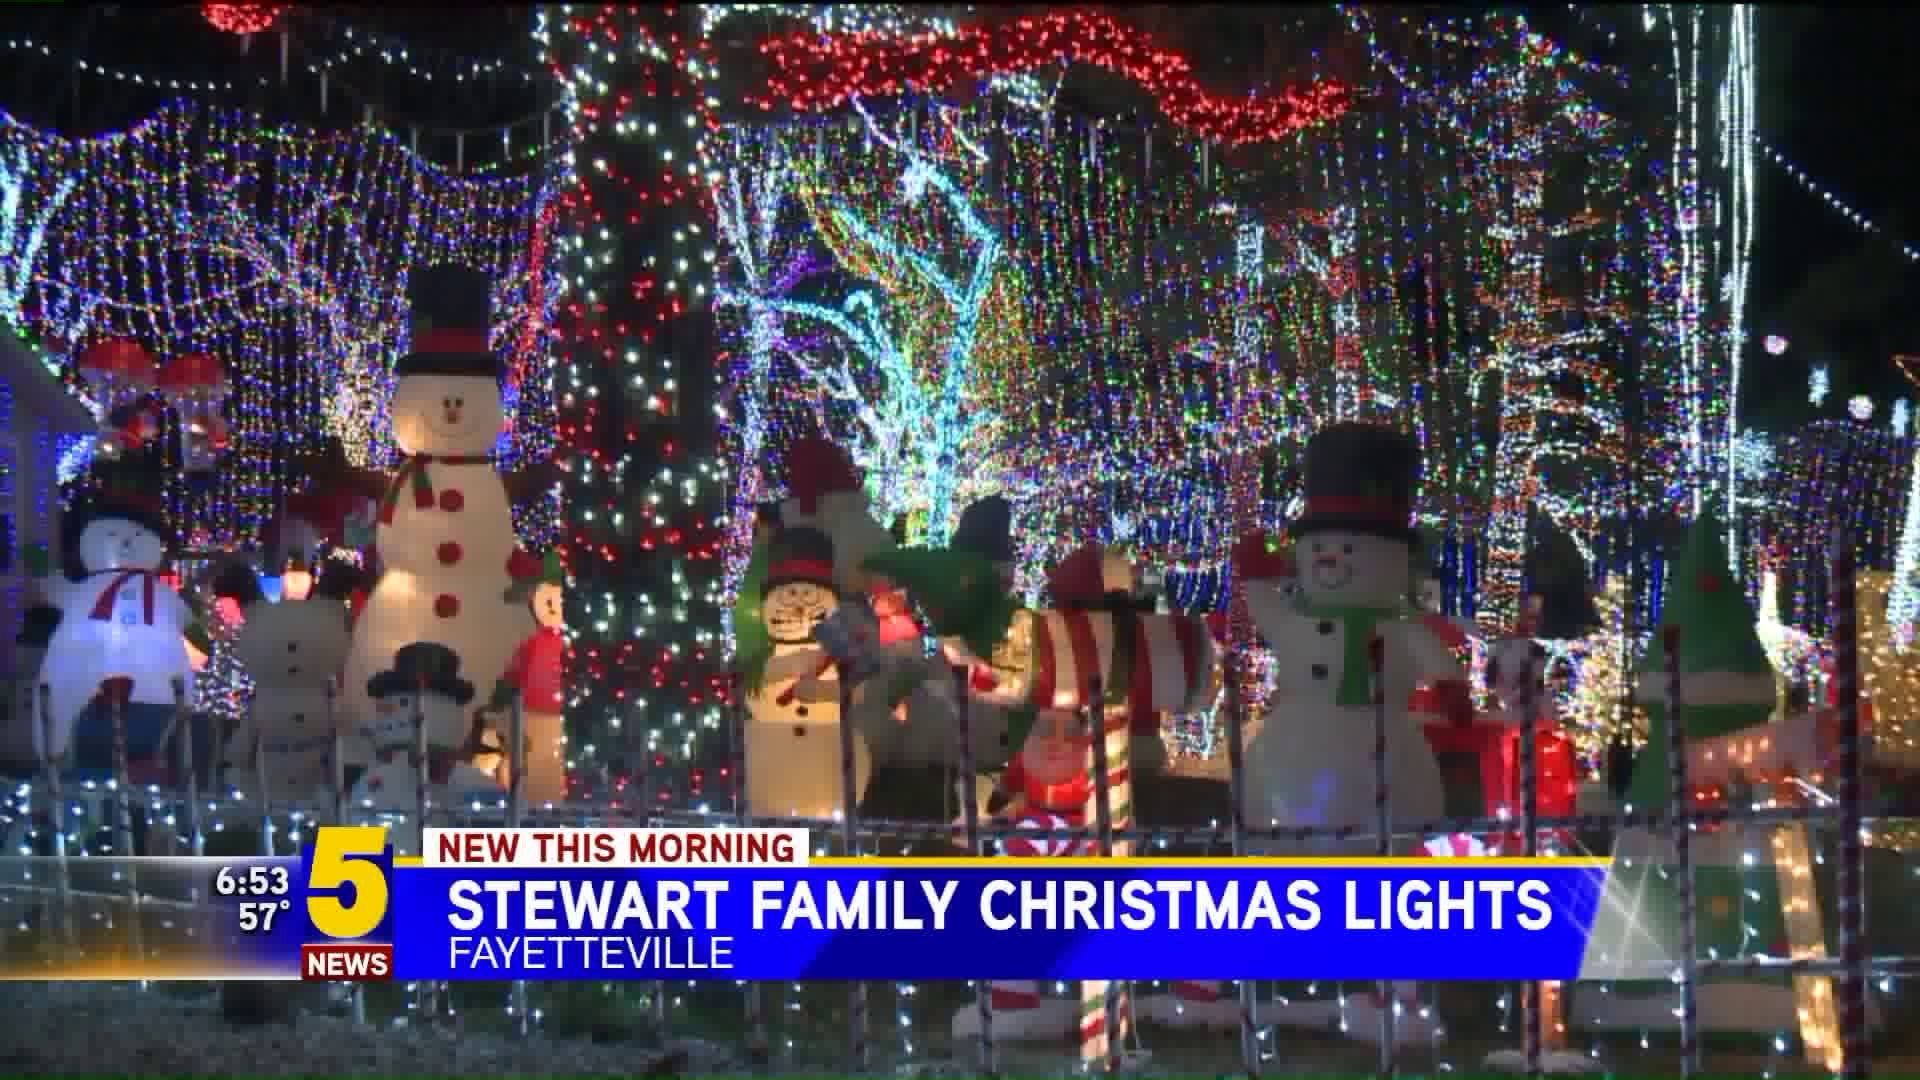 Stewart Family Christmas Lights